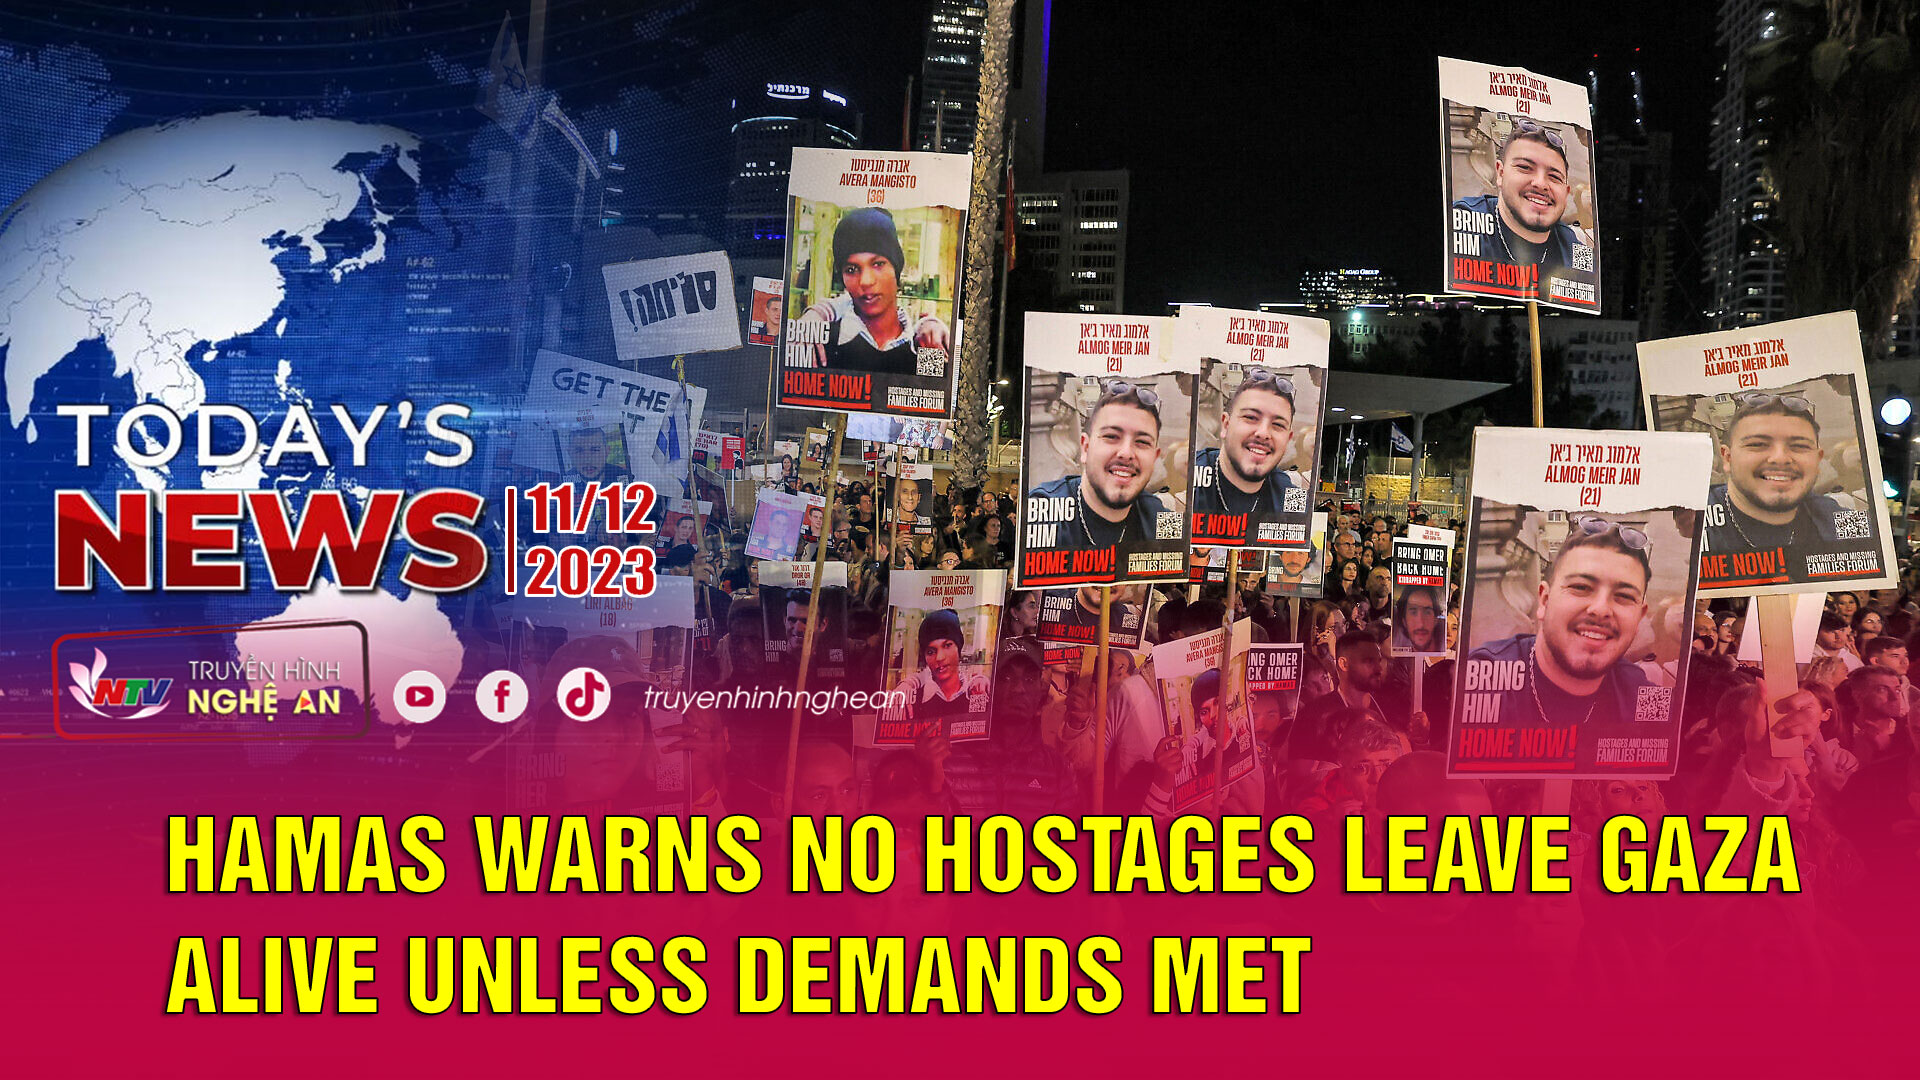 Today's News - 11/12/2023: Hamas warns no hostages leave Gaza alive unless demands met